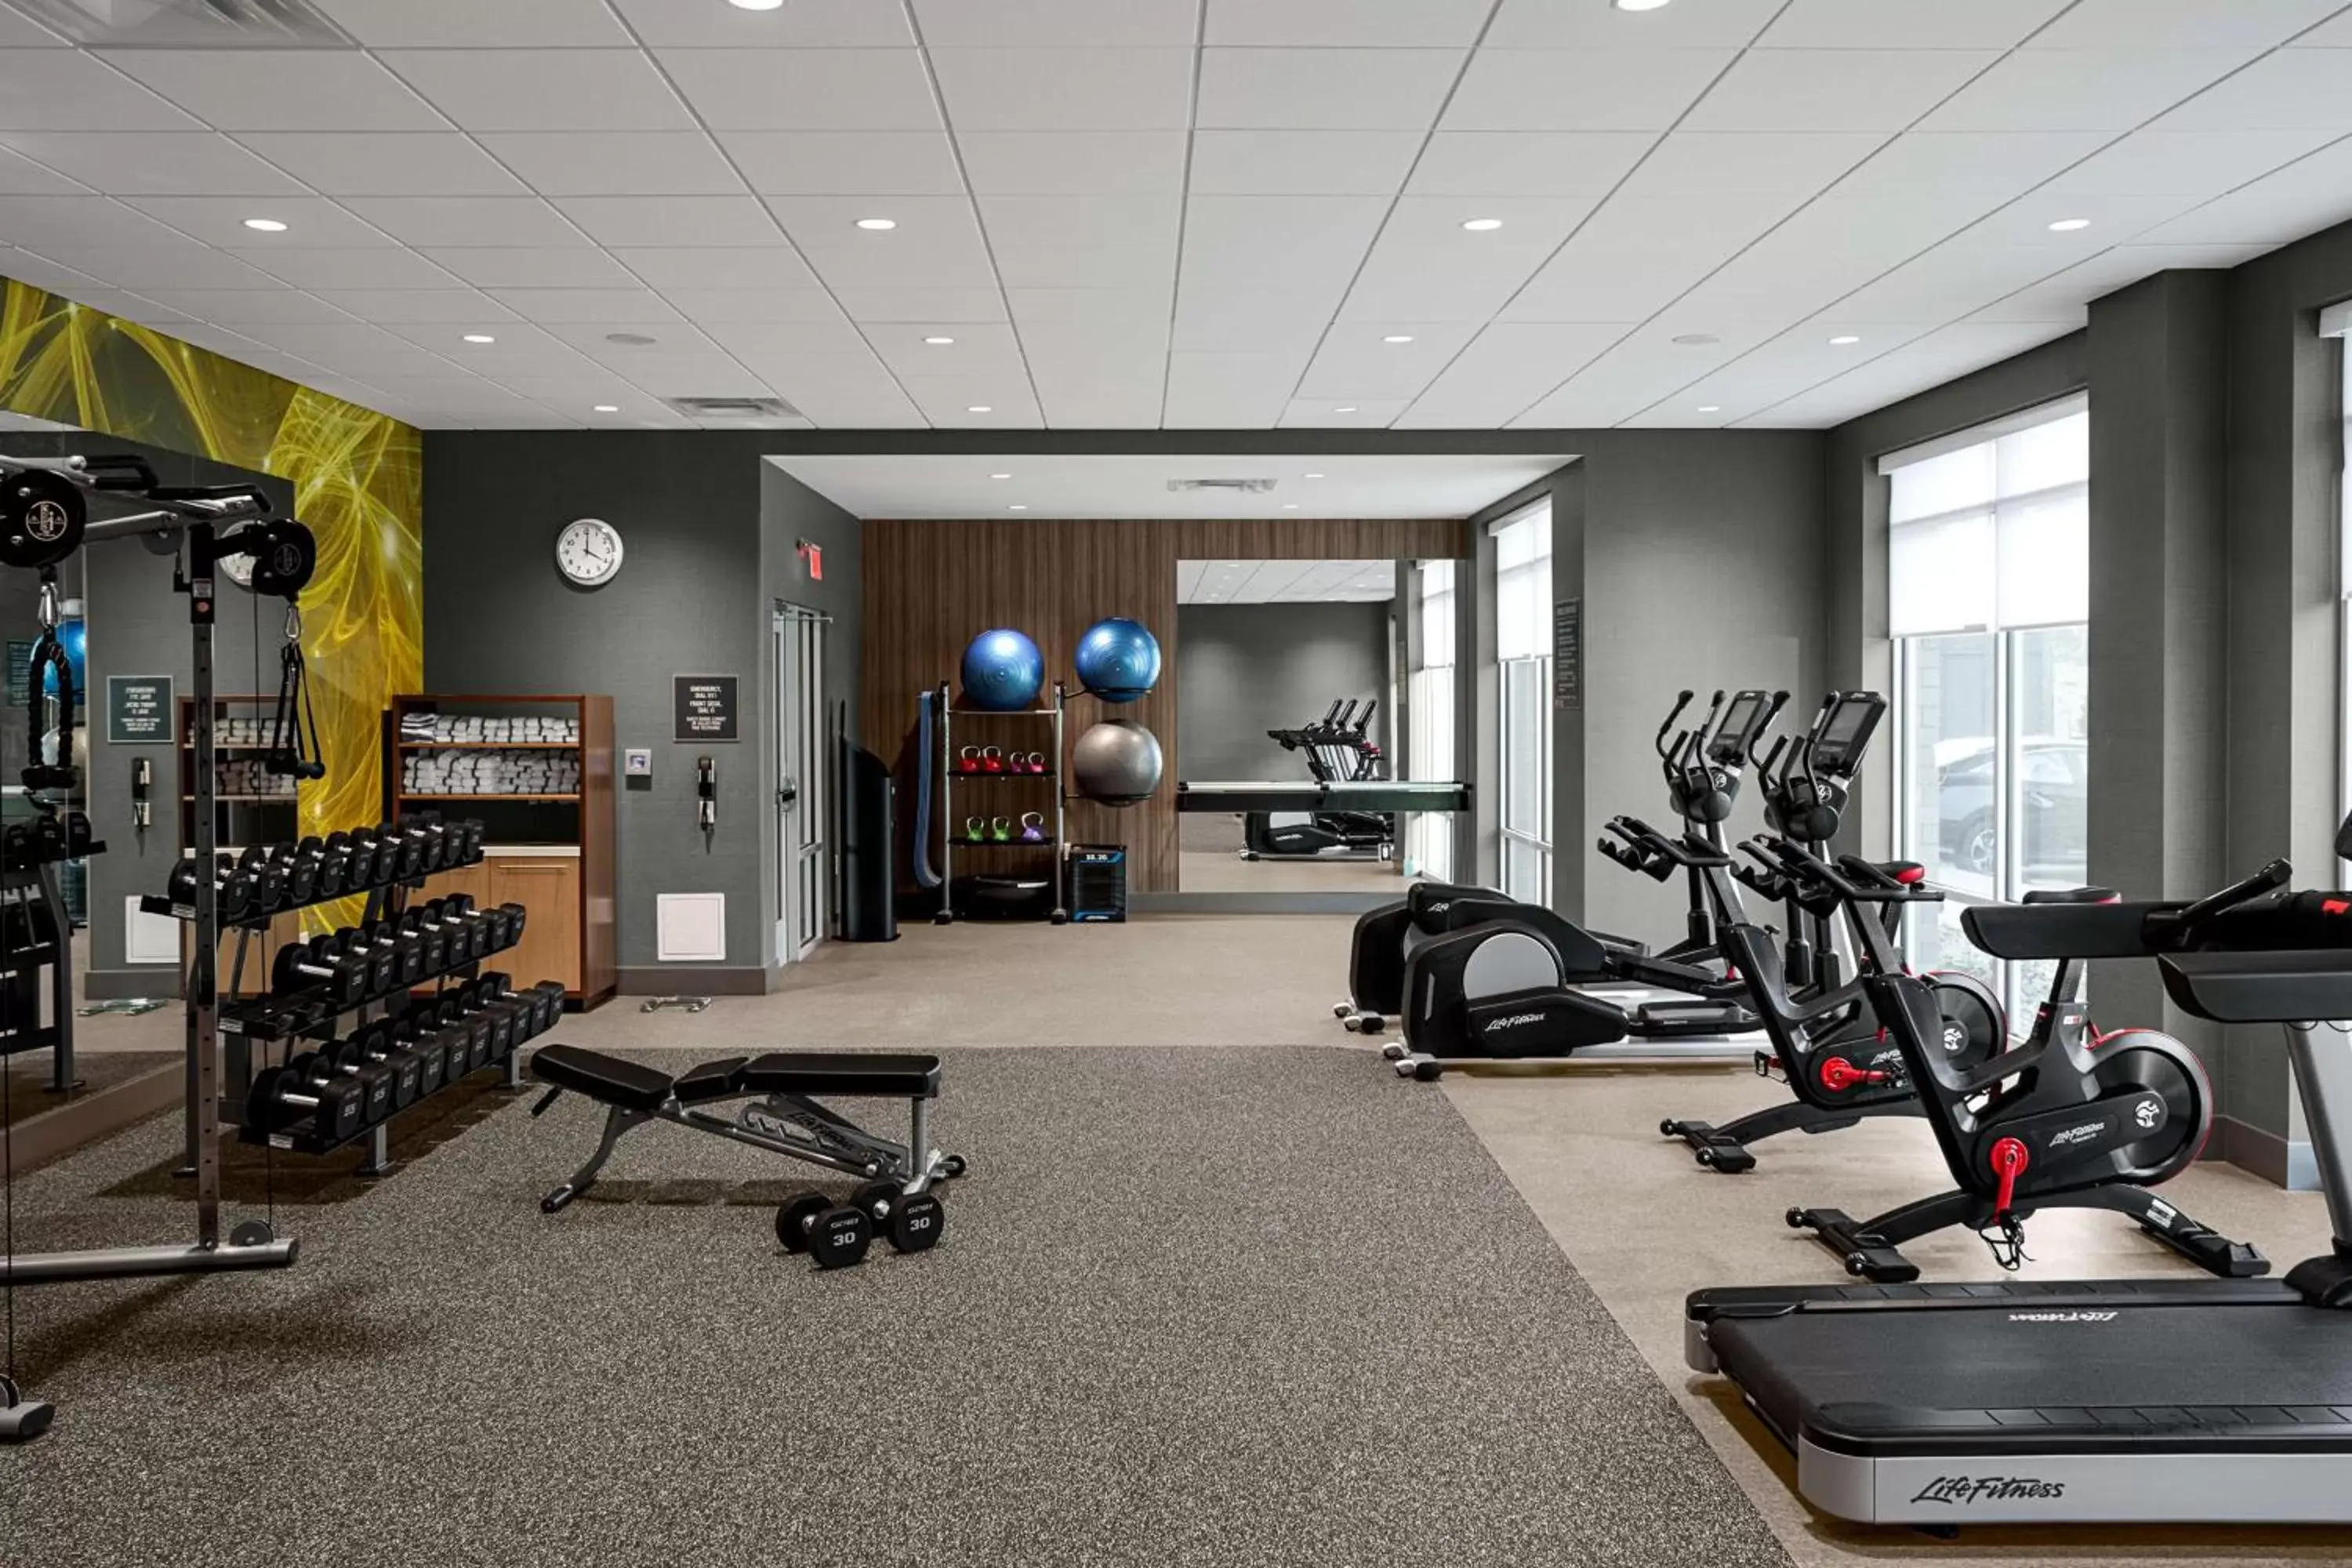 Fitness centre/facilities, Fitness Center/Facilities in Tru By Hilton Mt. Juliet, TN